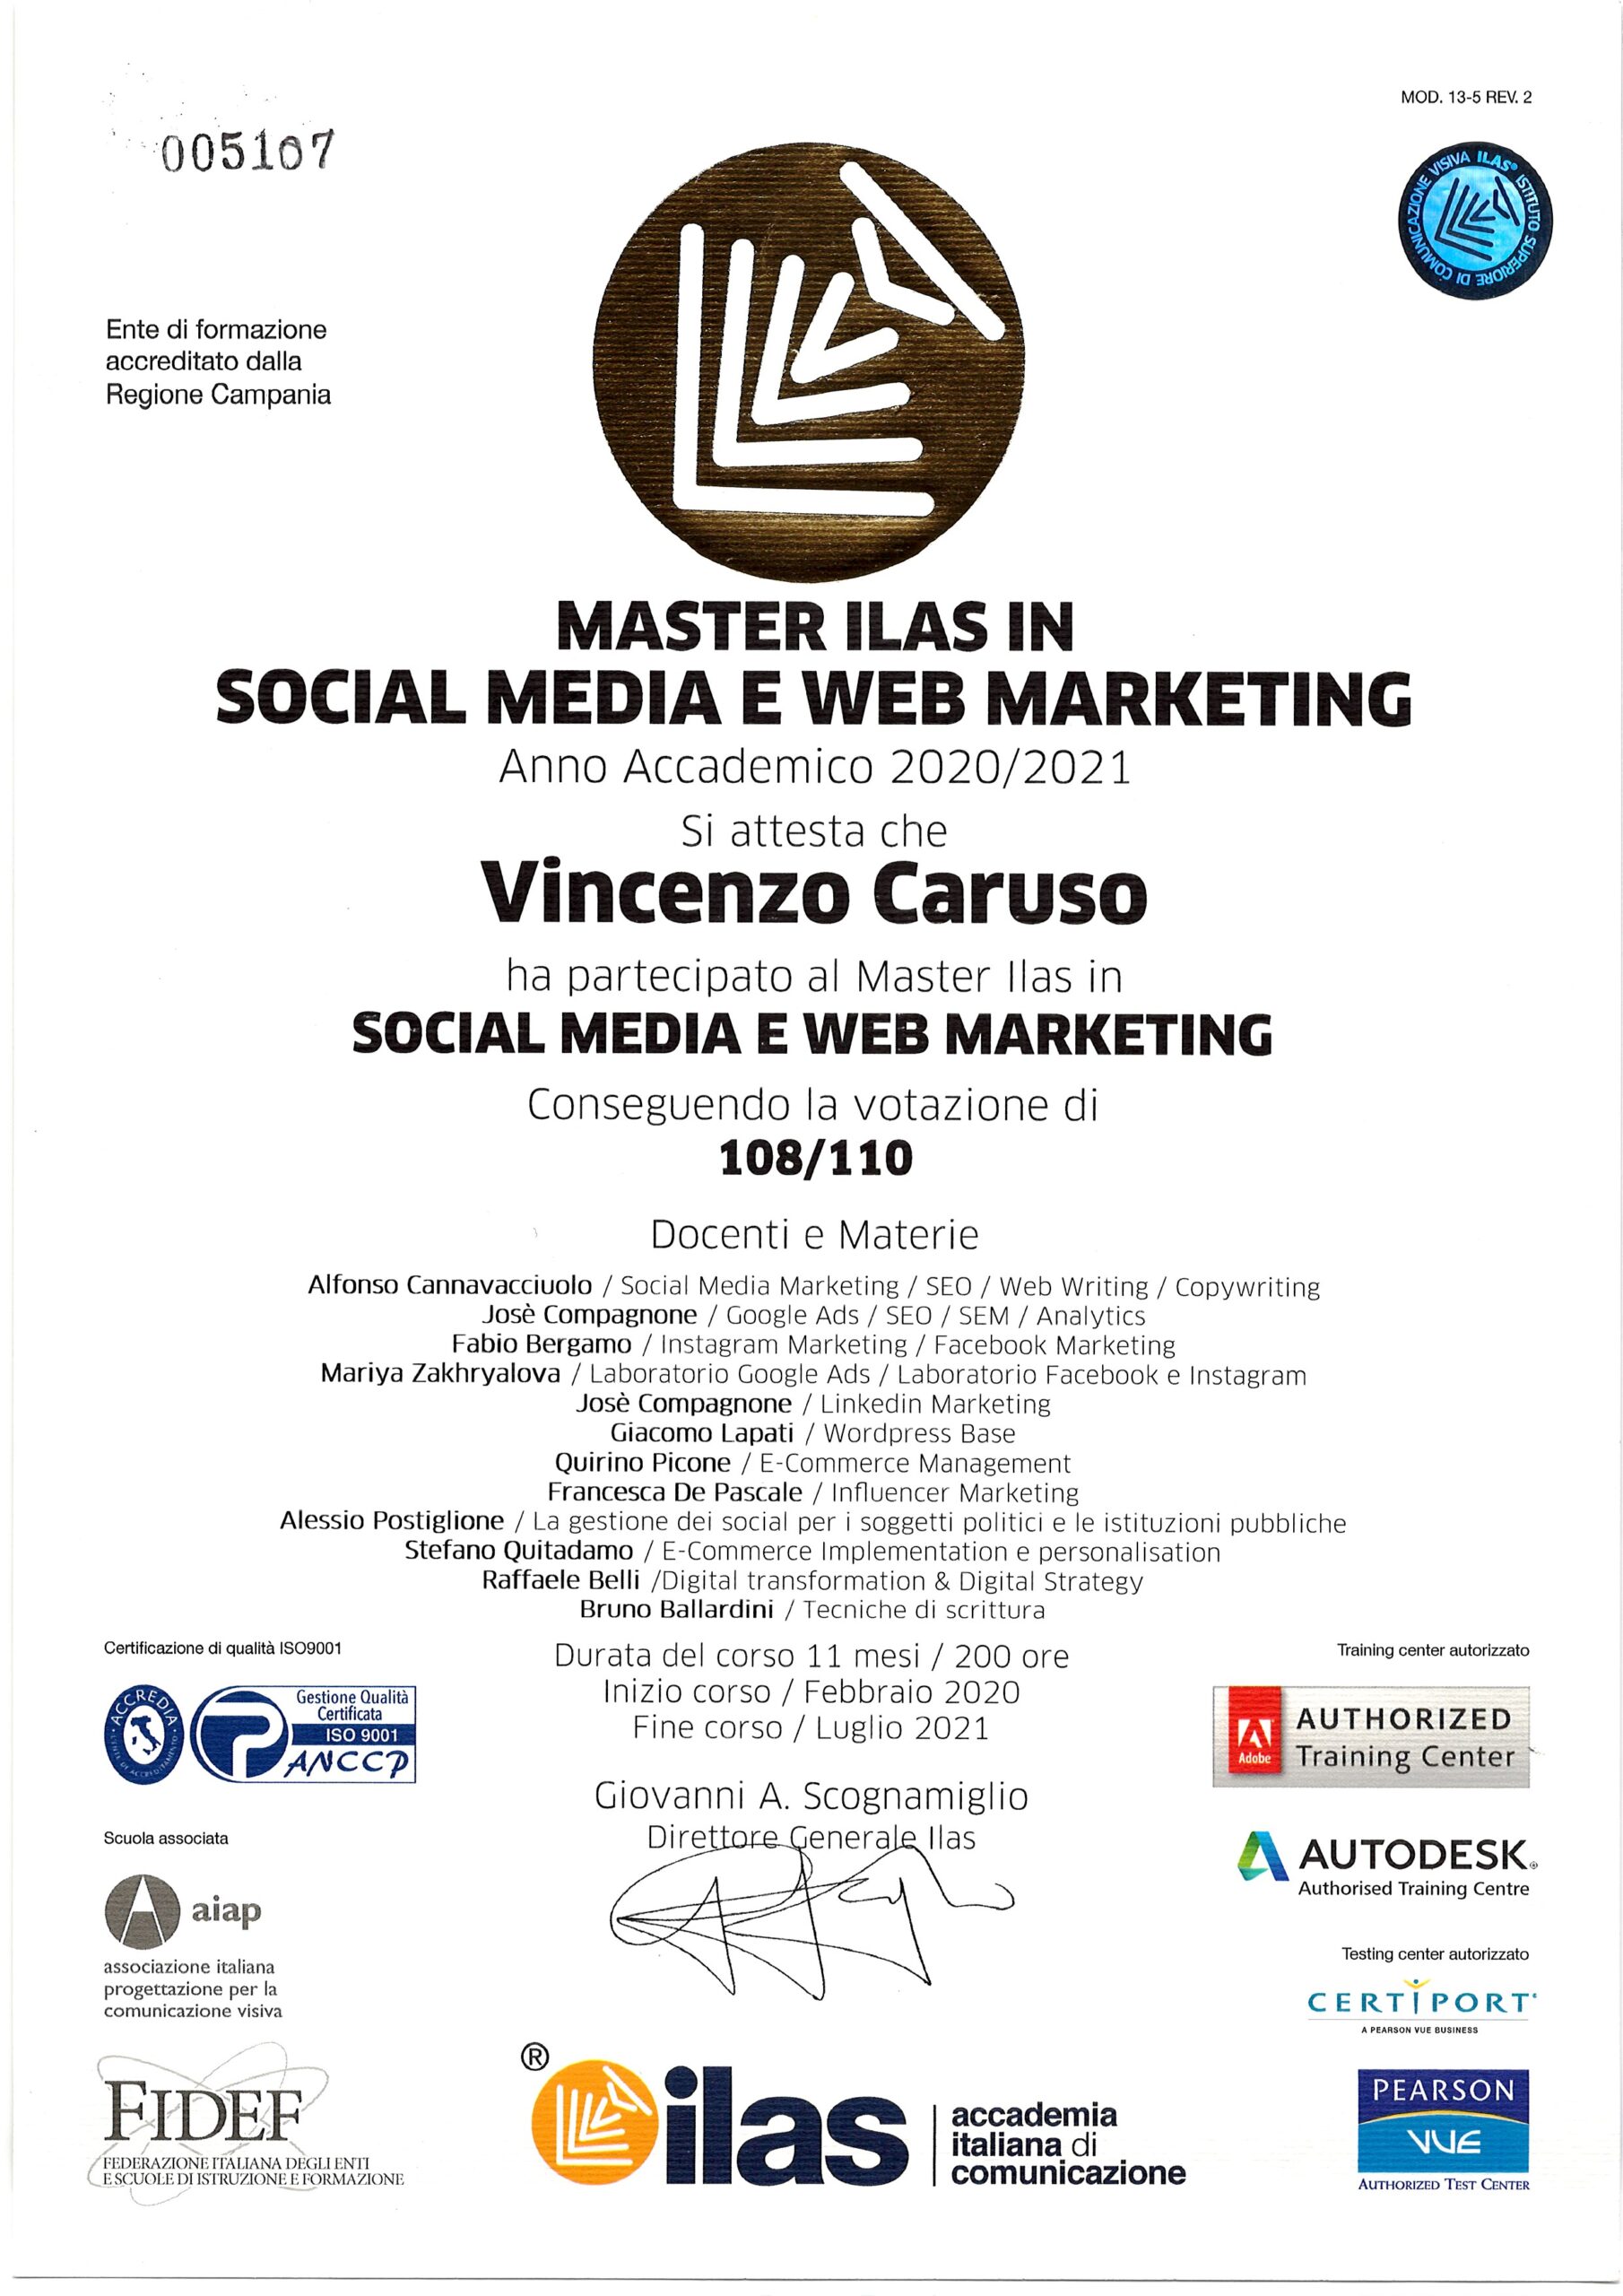 Vincenzo Caruso Master in Social Media & Web Marketing